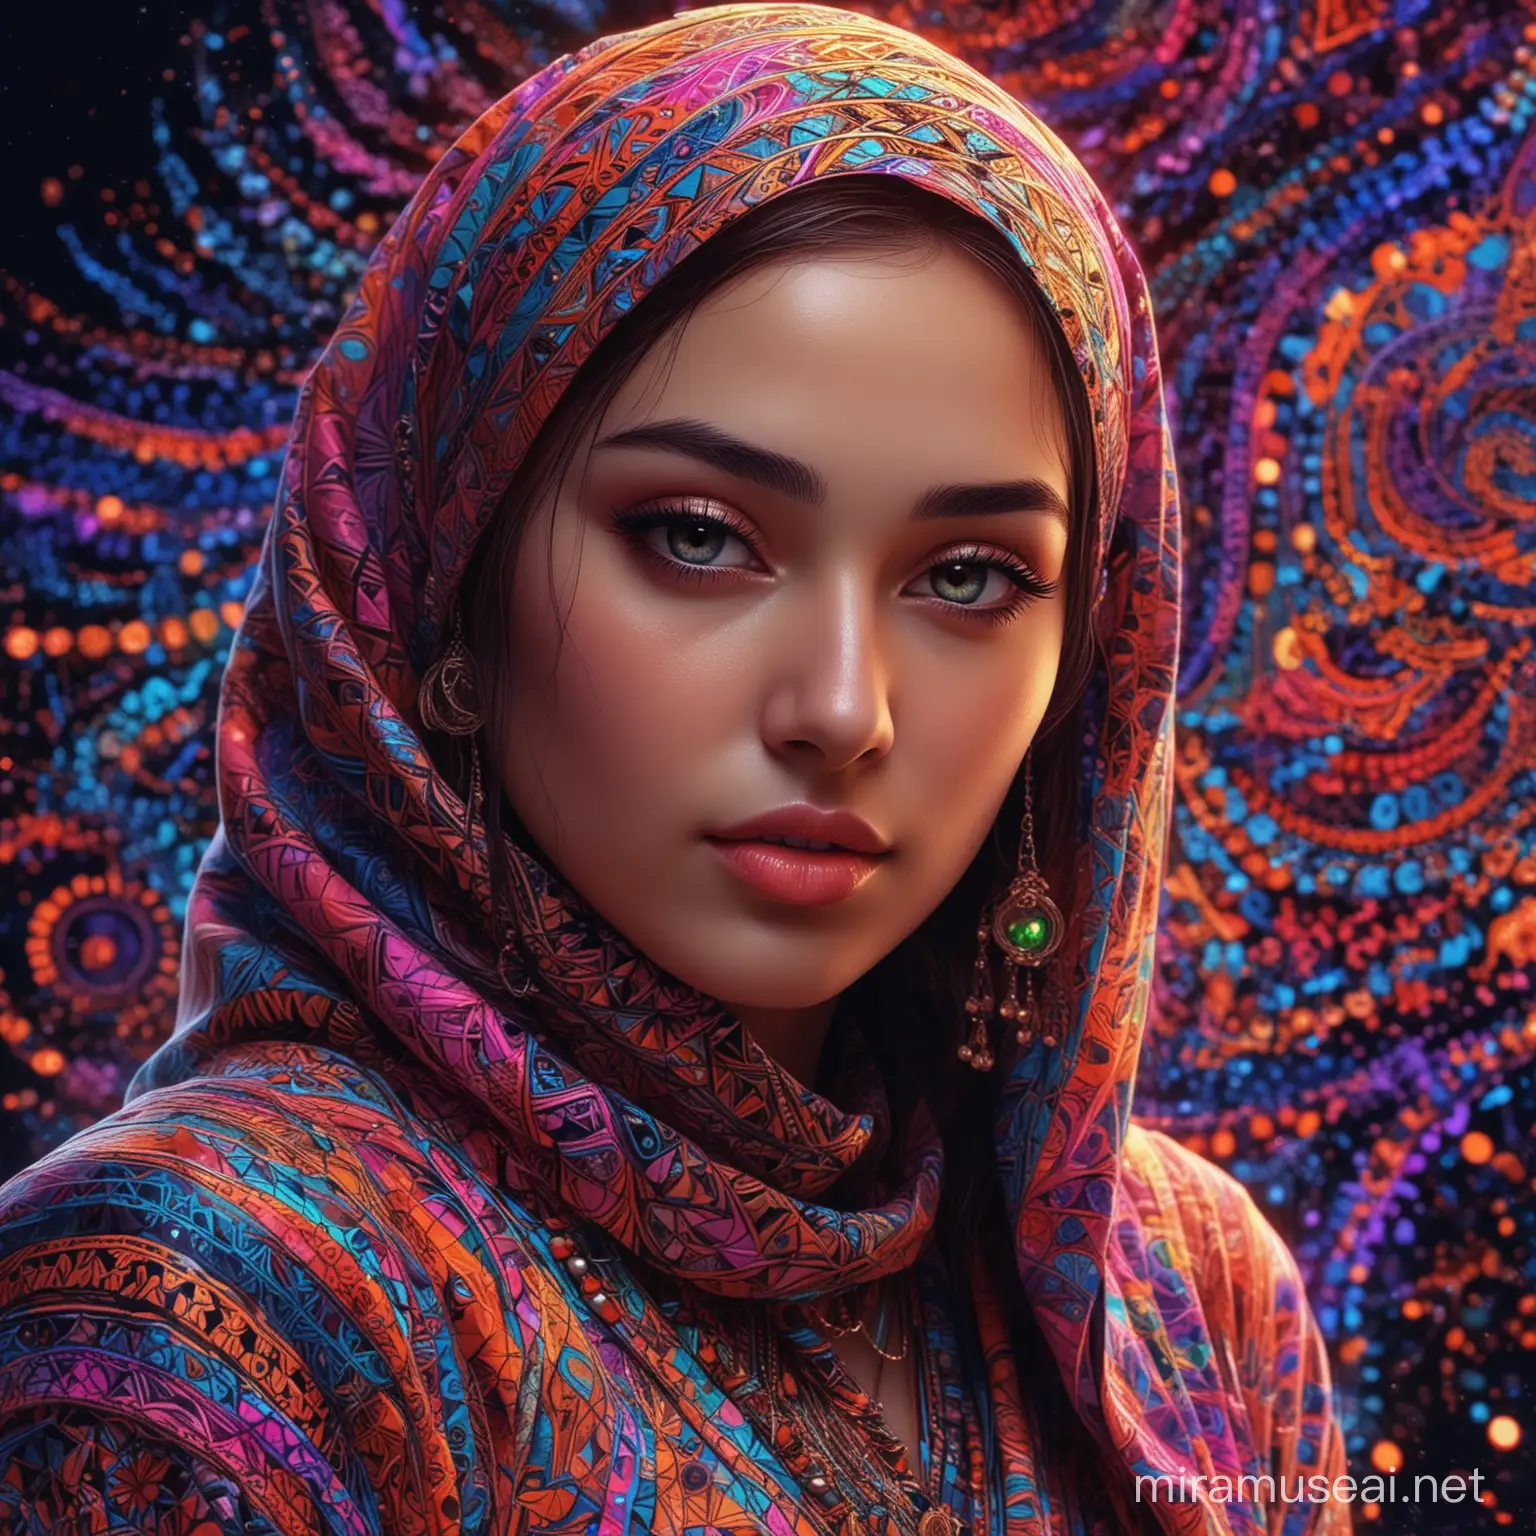 Stunning Hijabi Figure in Vibrant Fractal and Zentangle Art